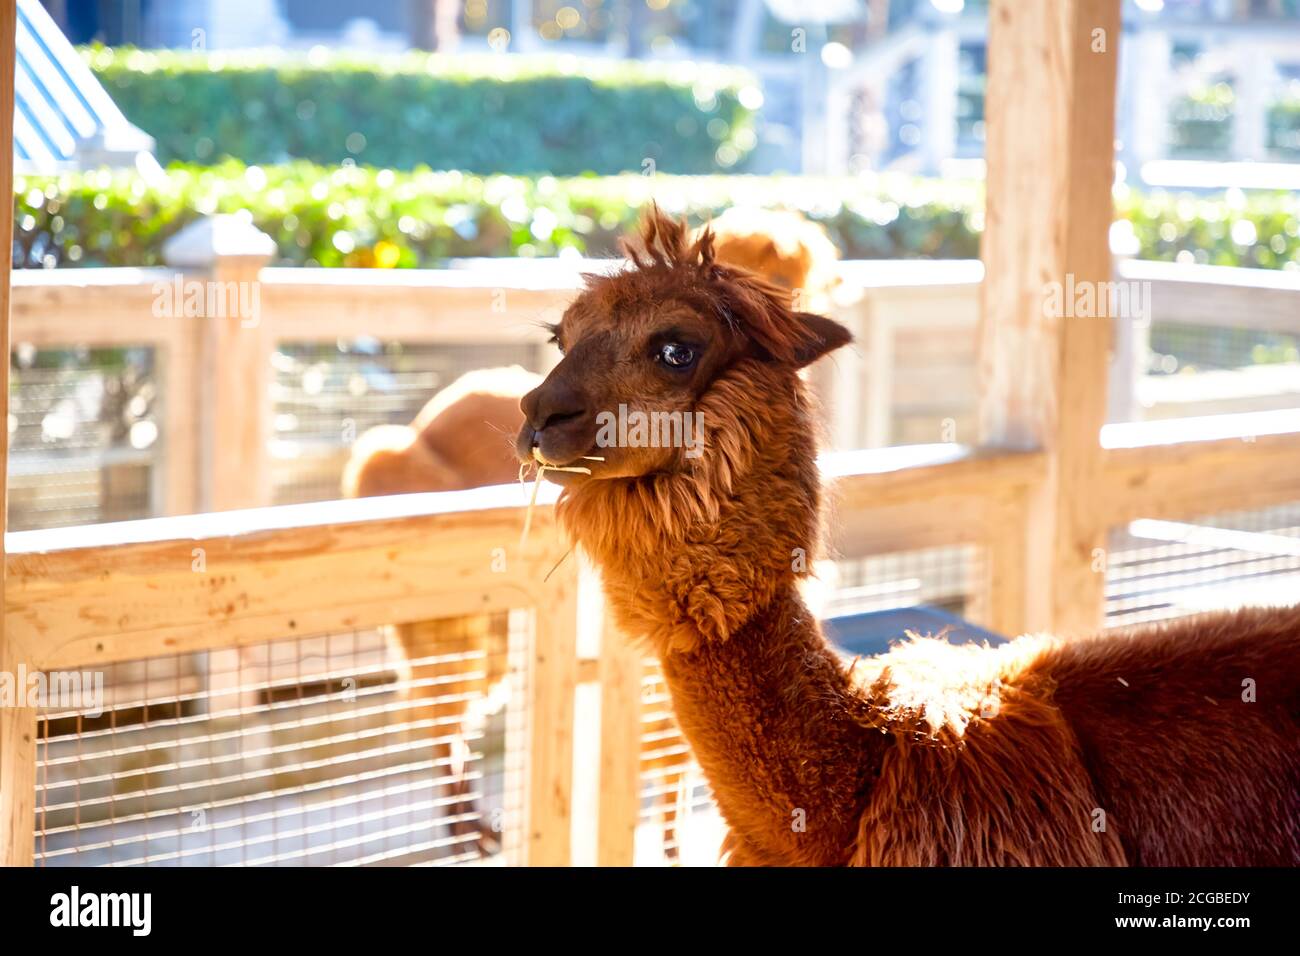 The animal llama chews the grass thoughtfully Stock Photo